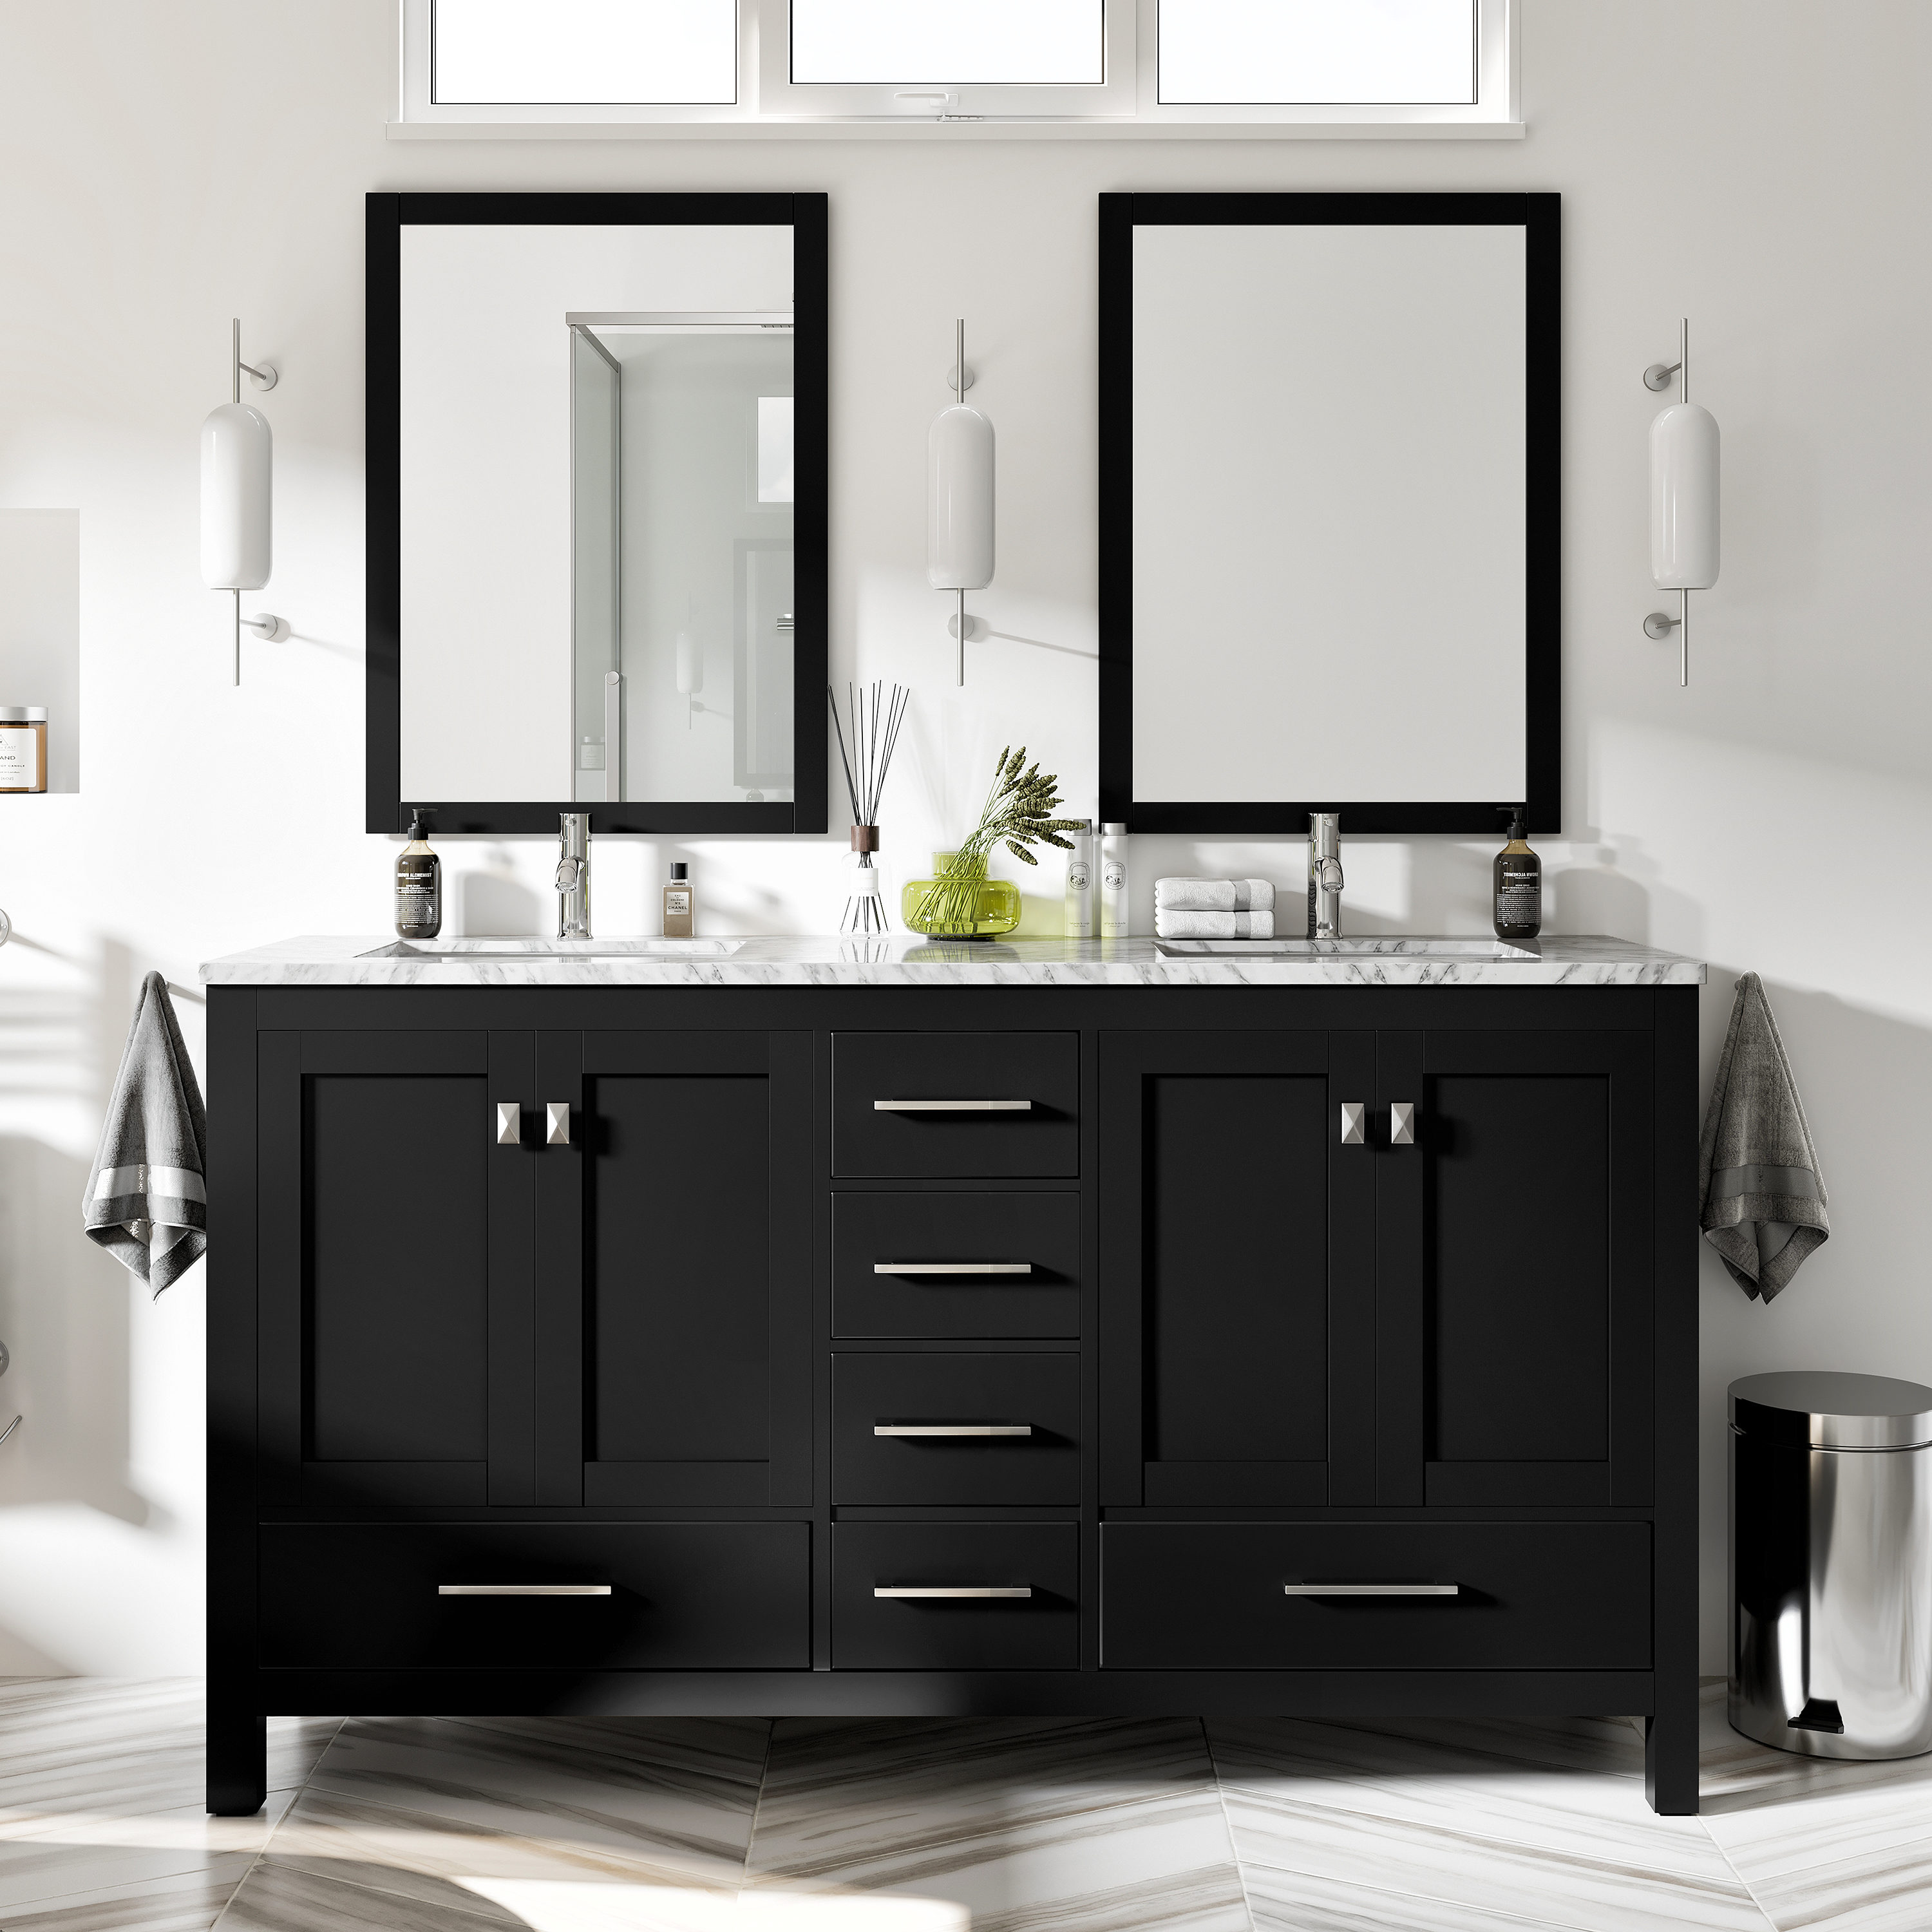 EVIVA Epic White 60 Double Sink Bathroom Vanity w/Open Space Storage